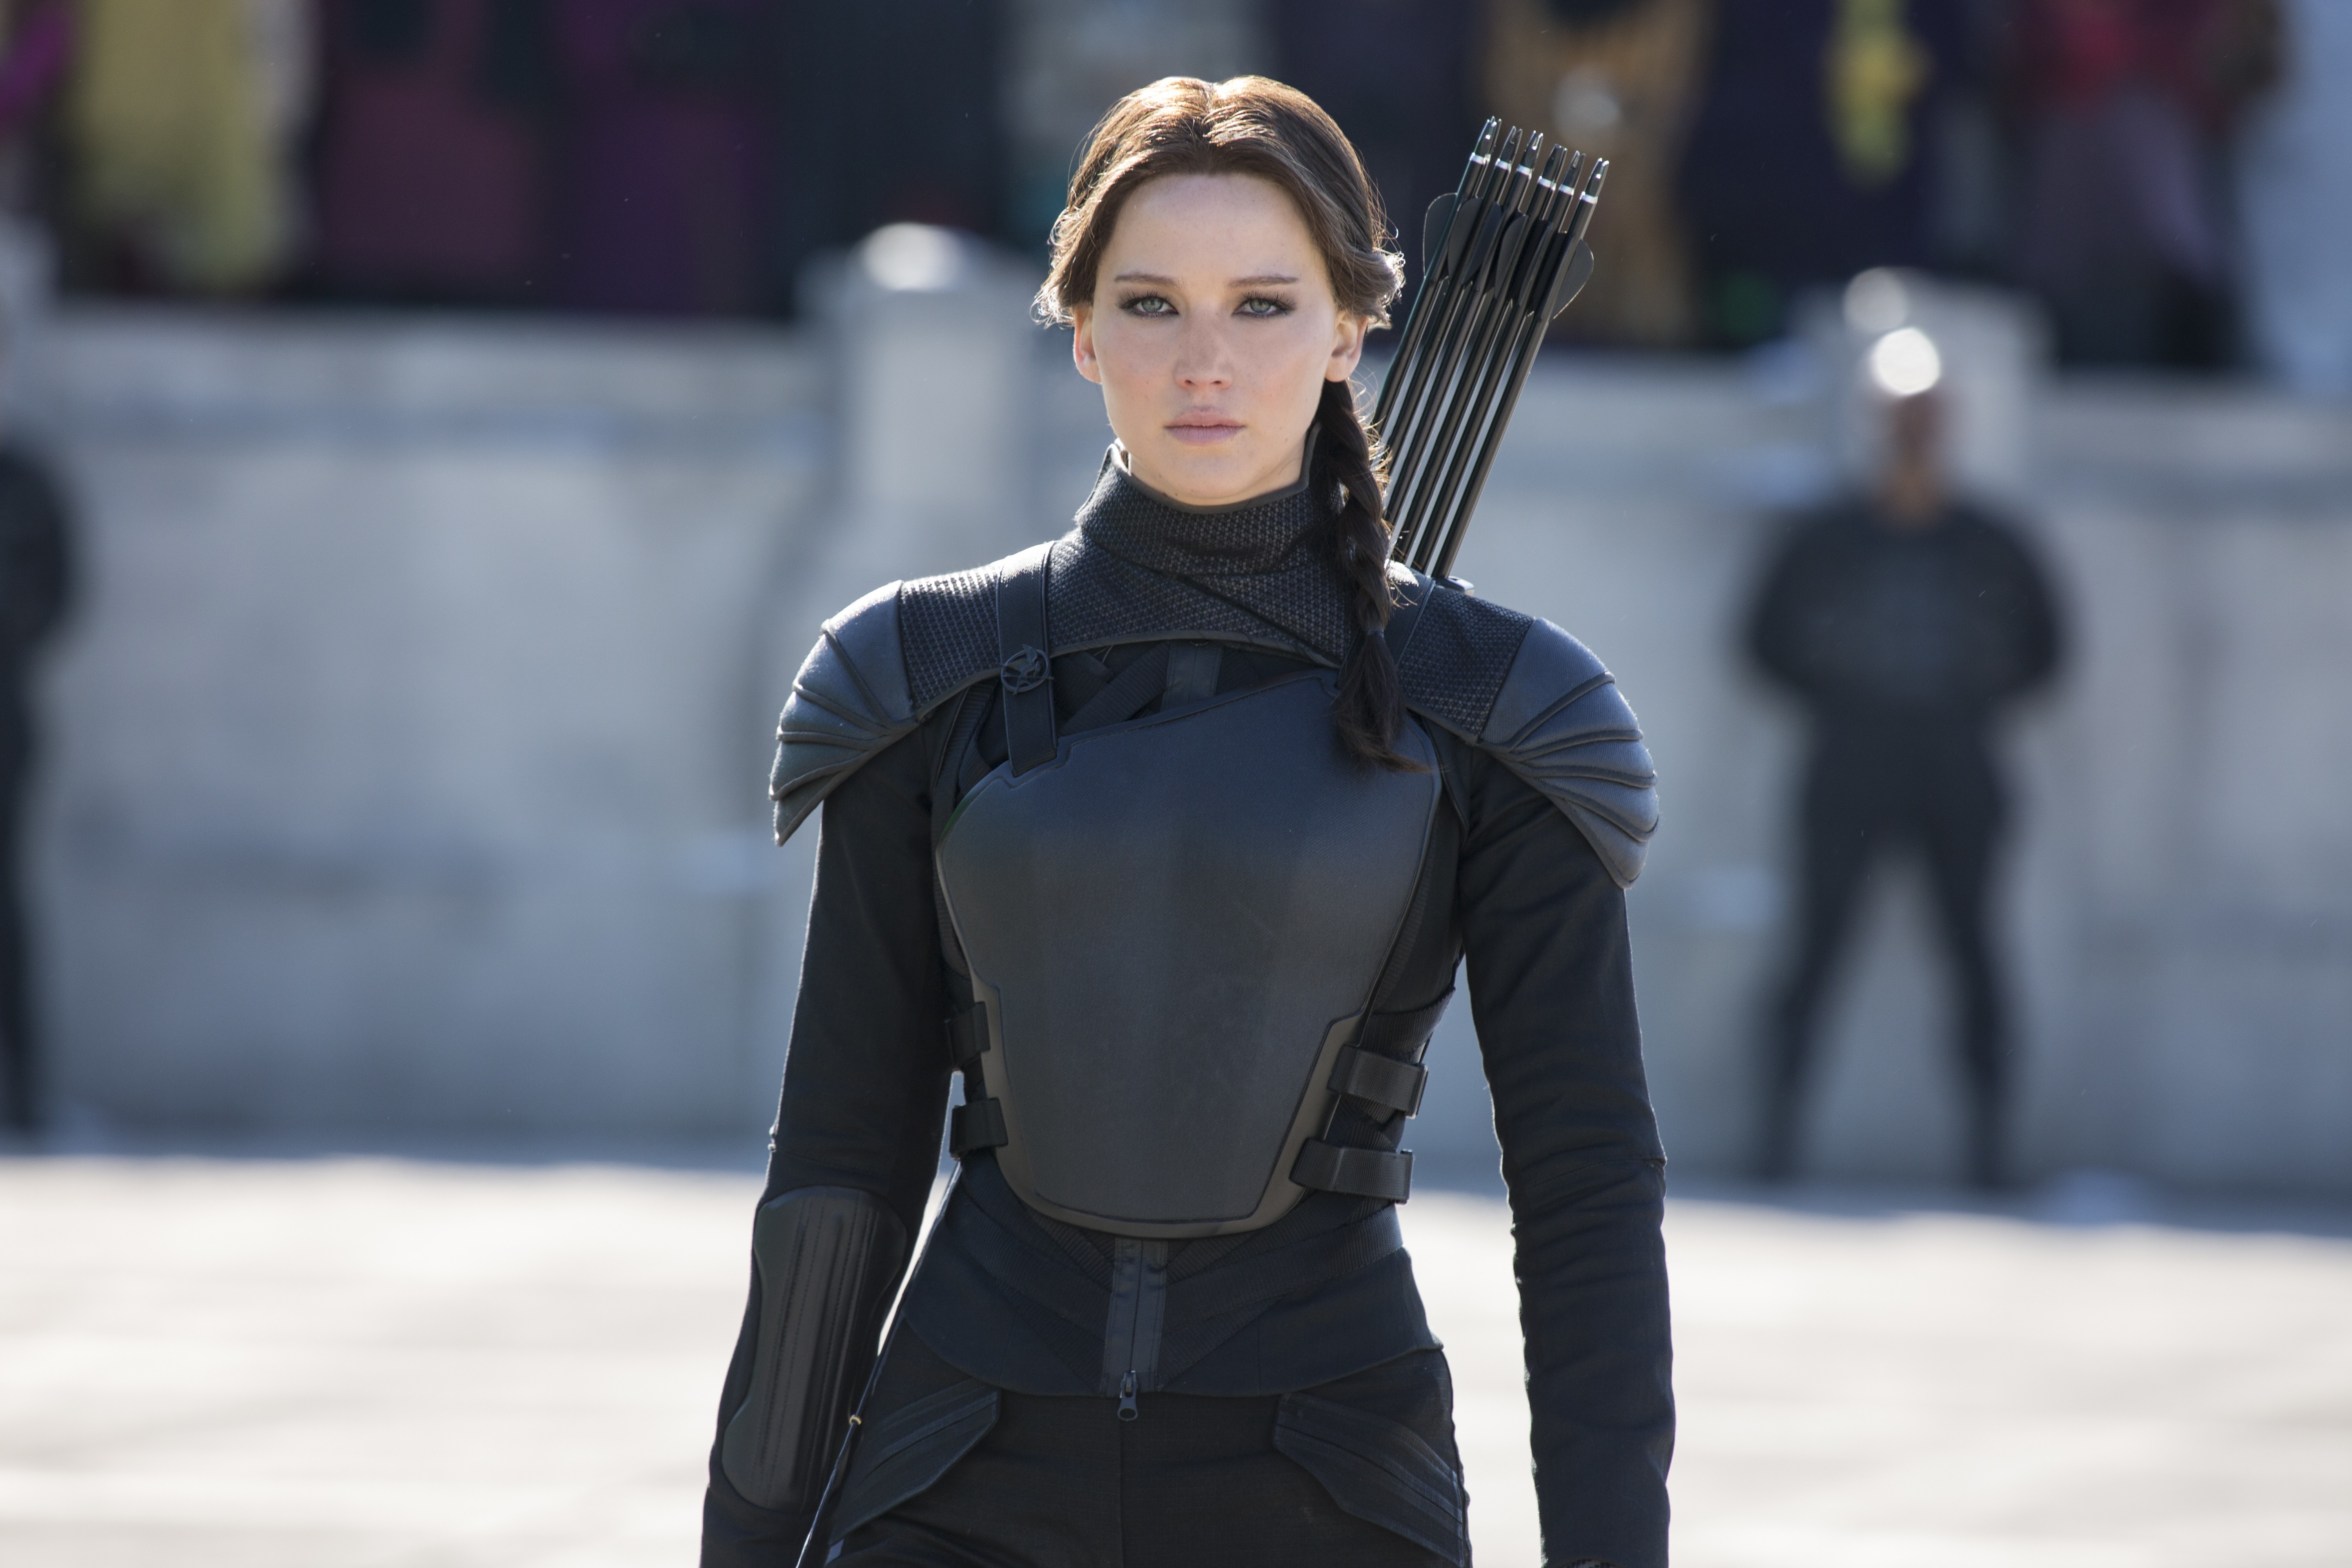 women, Archers, Jennifer Lawrence, The Hunger Games Wallpaper